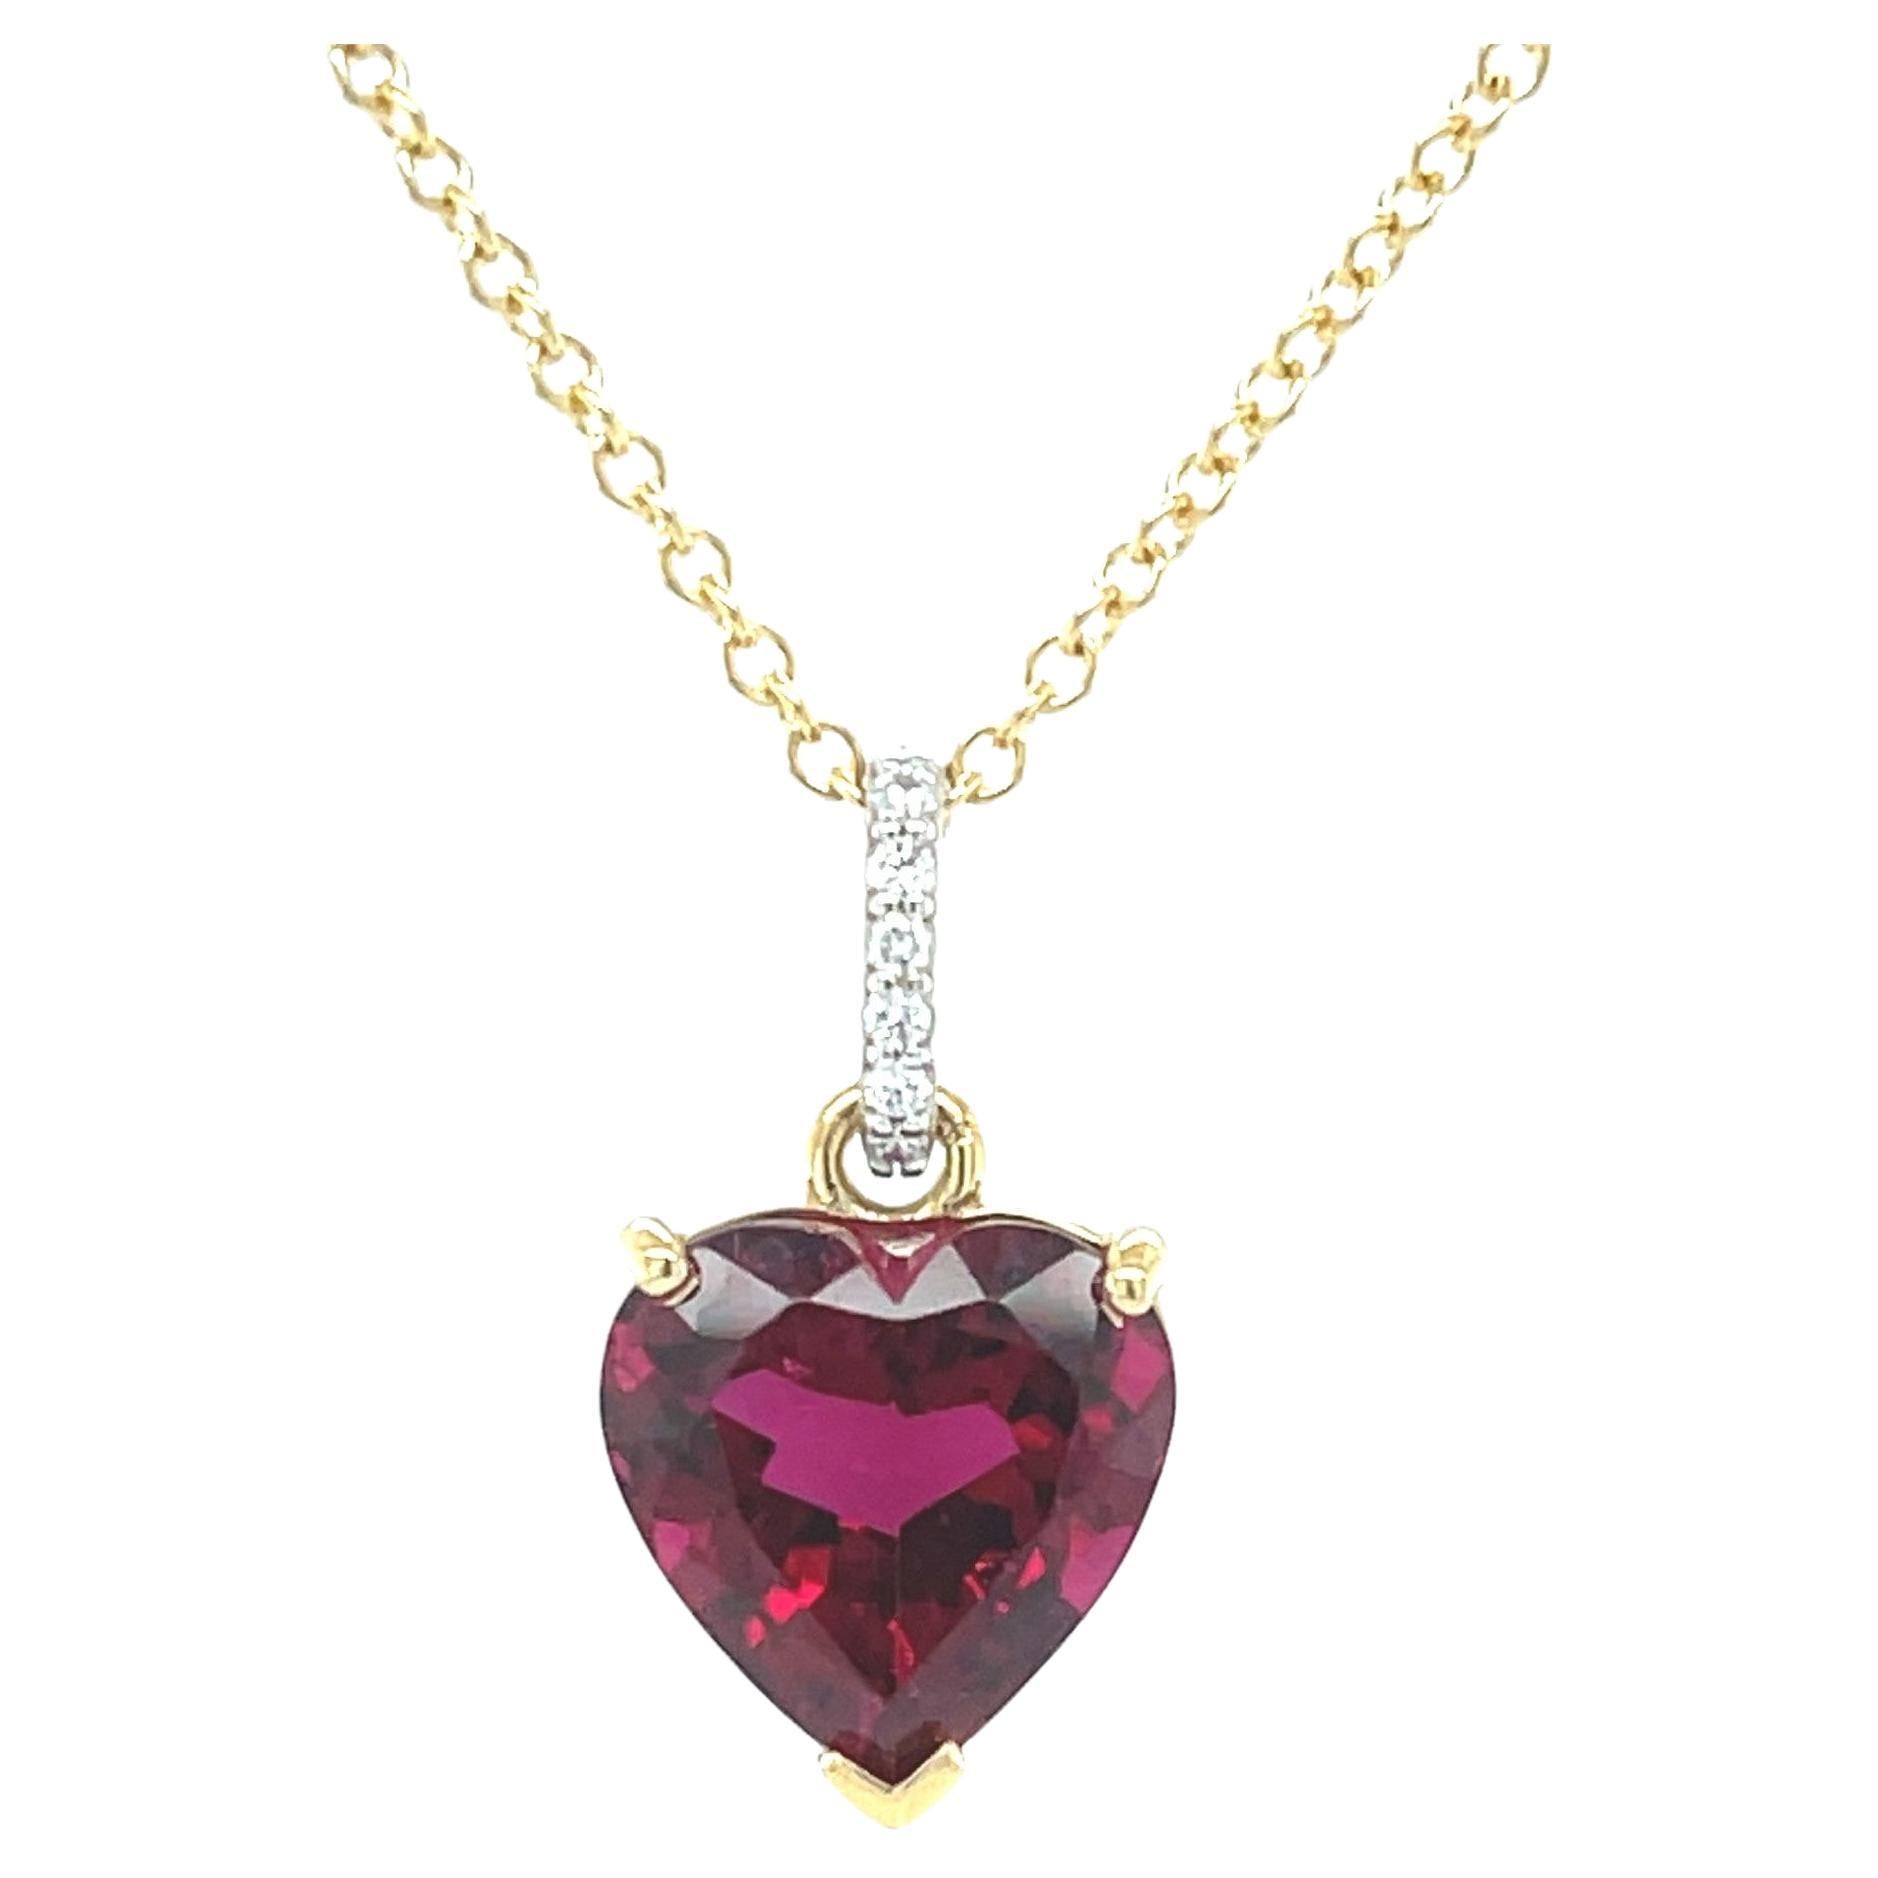 5.14 Carat Heart Shaped Rubellite Tourmaline & Diamond Necklace 